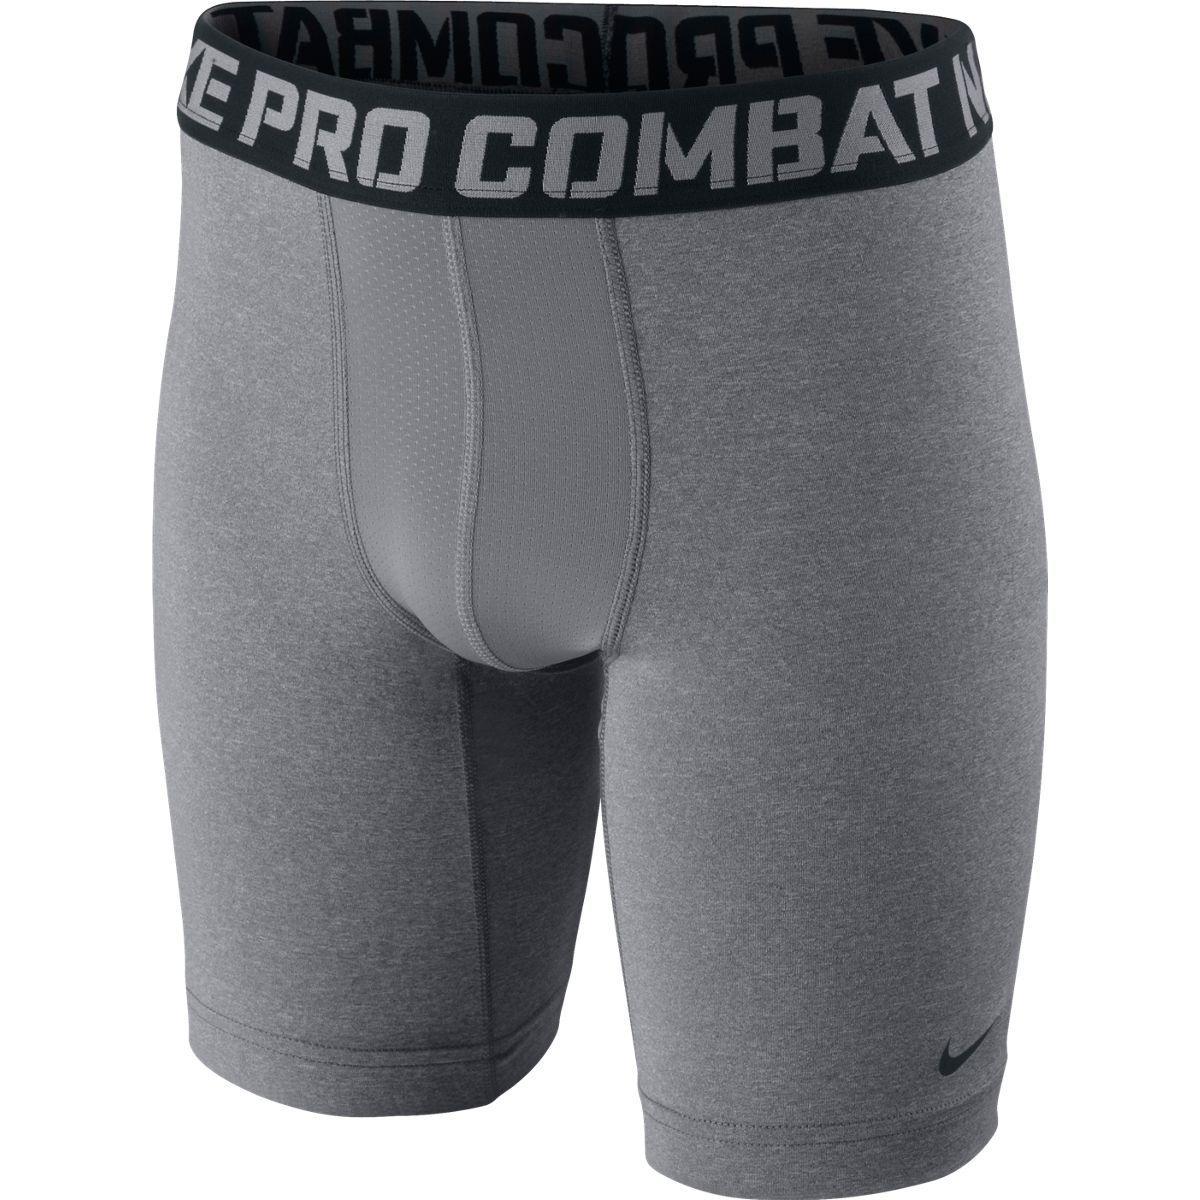 Nike pro combat. Nike Pro Combat шорты. Nike Pro Combat Dri-Fit шорты. Nike Pro Combat Dri-Fit Compression. Мужские термошорты Nike Pro Combat.